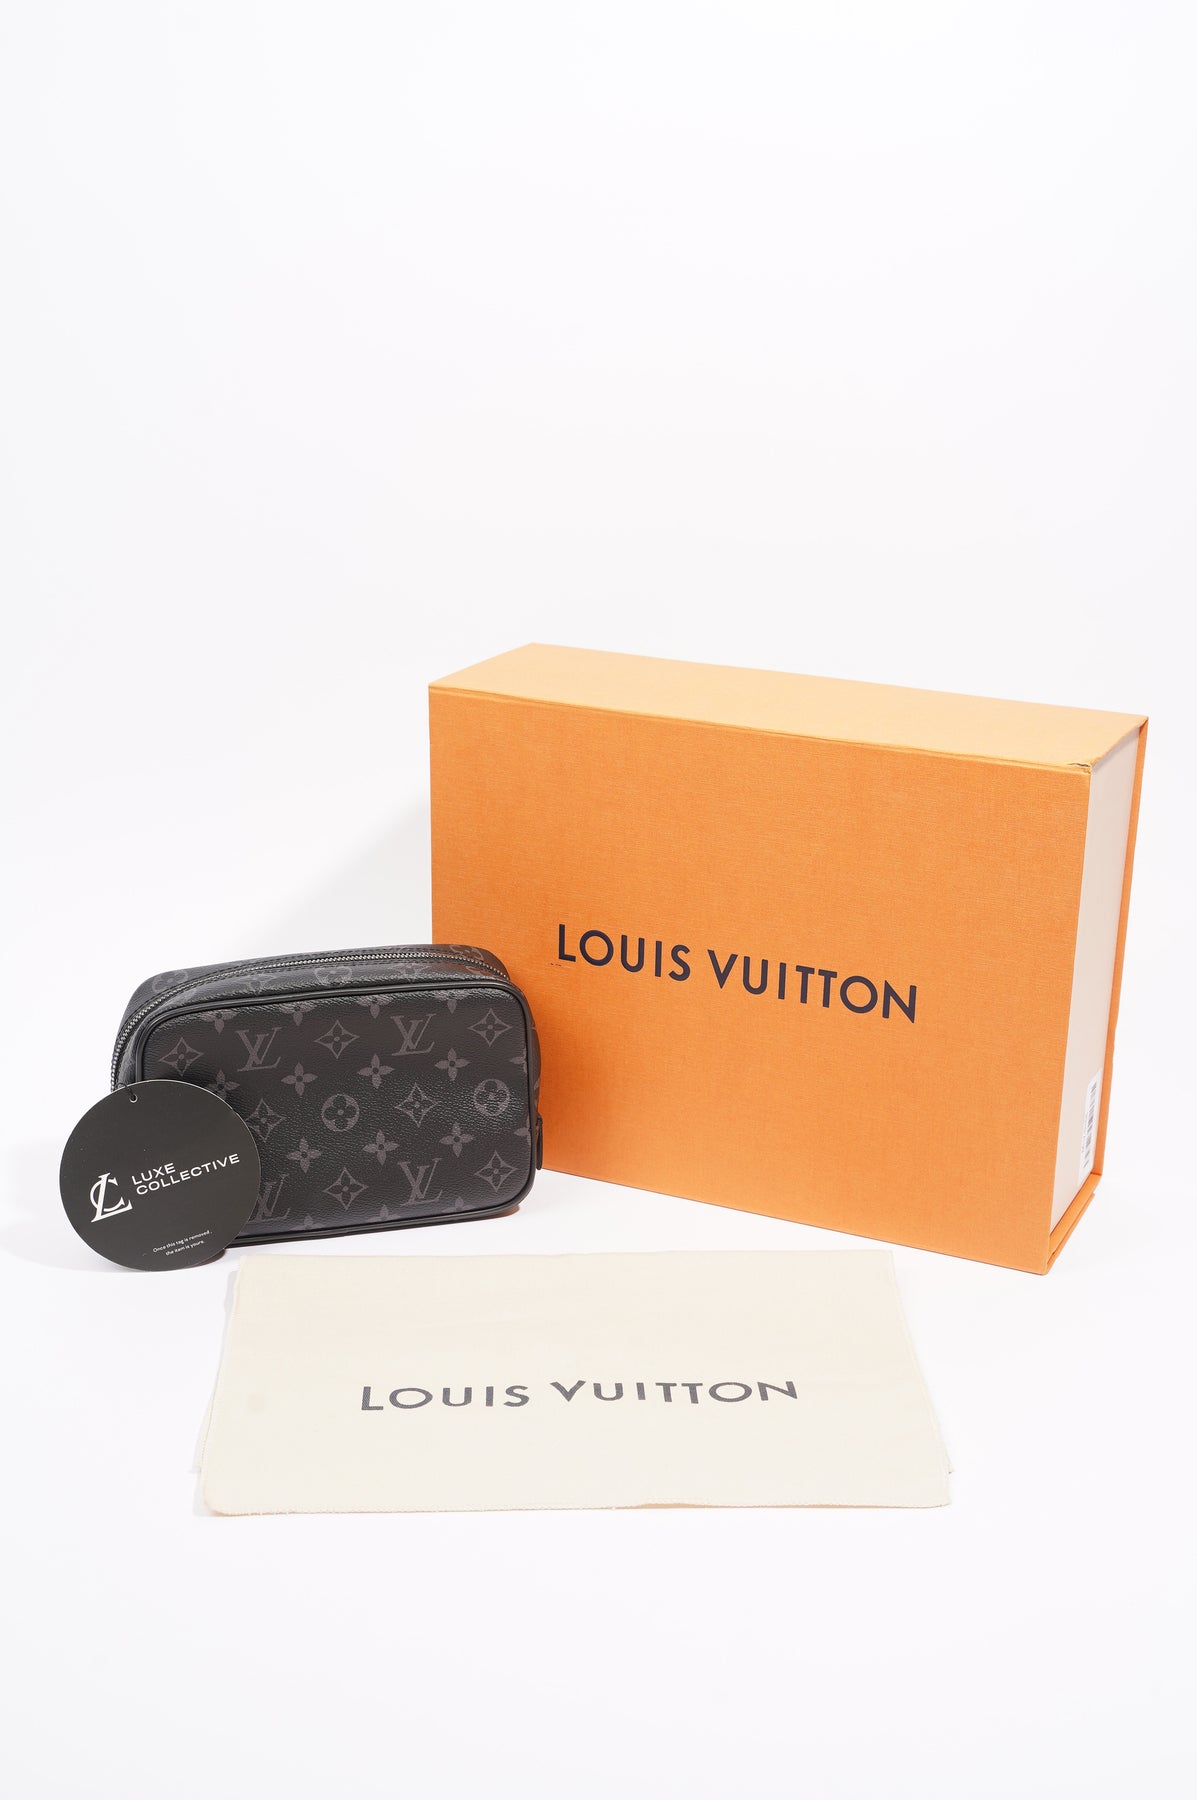 Shop Louis Vuitton Toiletry Bag 25 (M47527) by CITYMONOSHOP